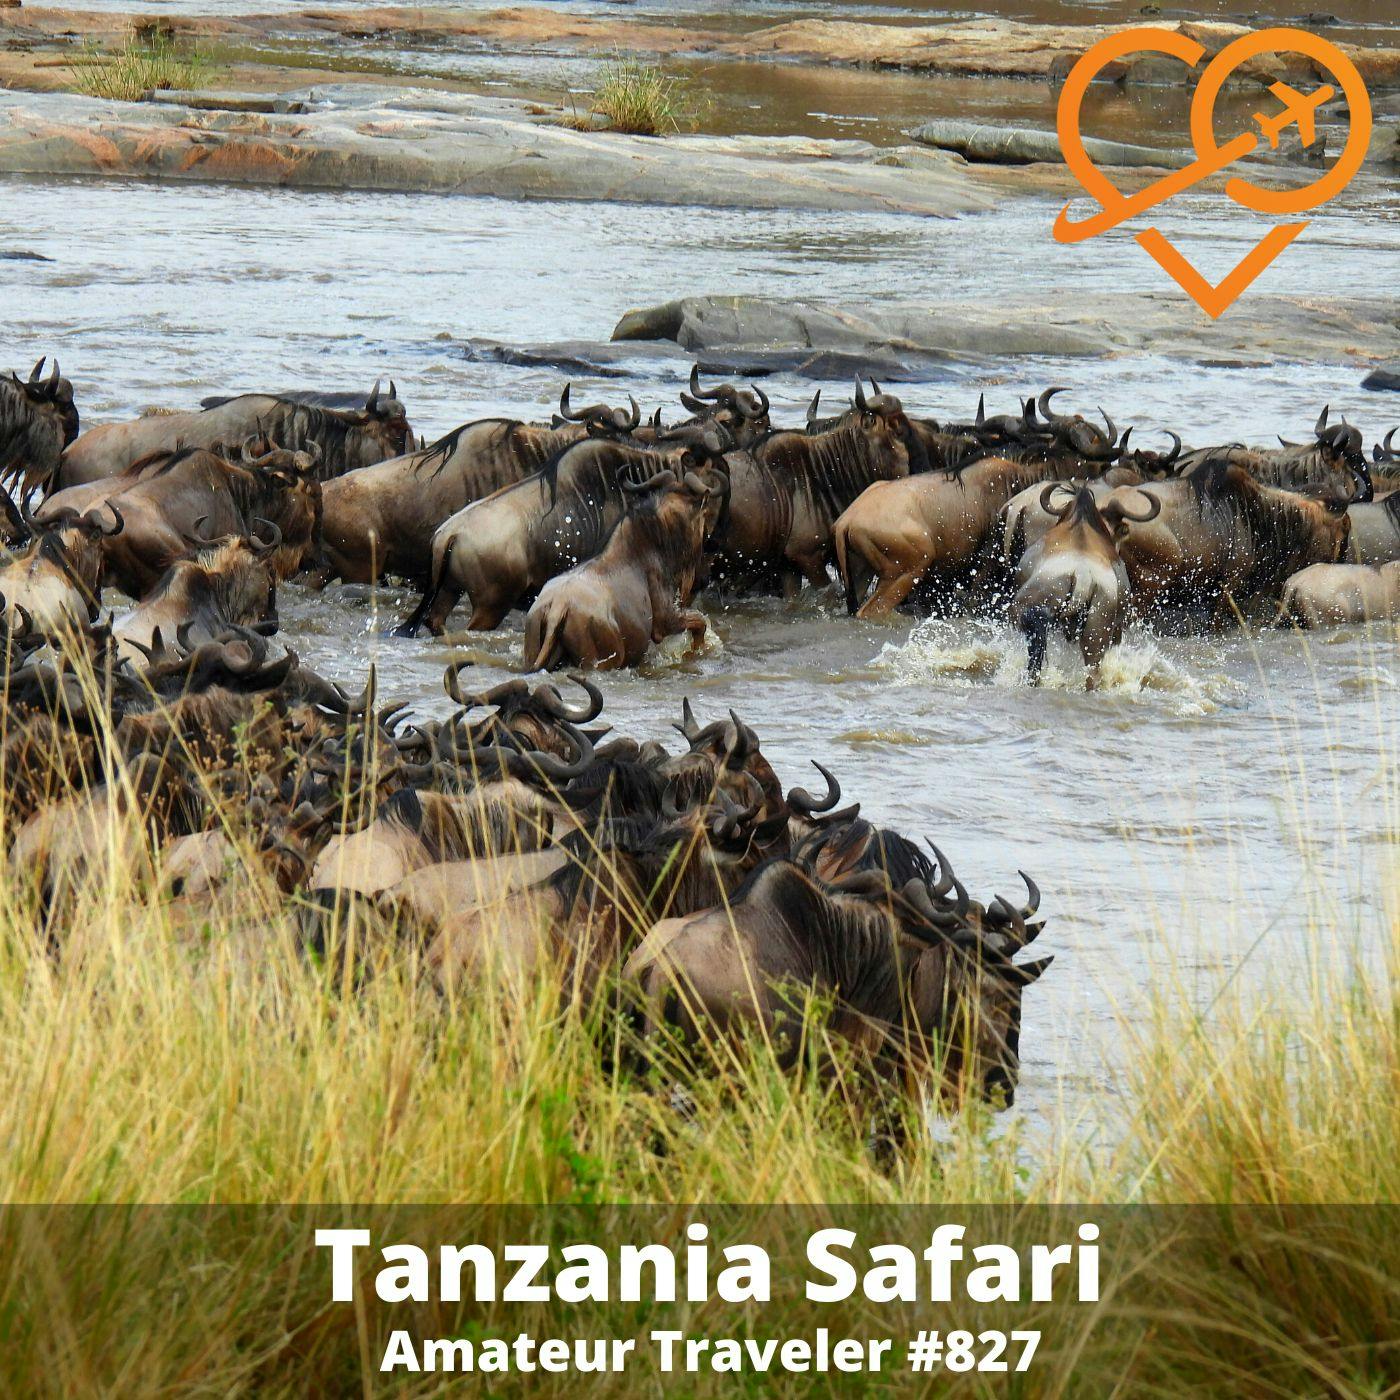 AT#827 - Travel to Tanzania on Safari